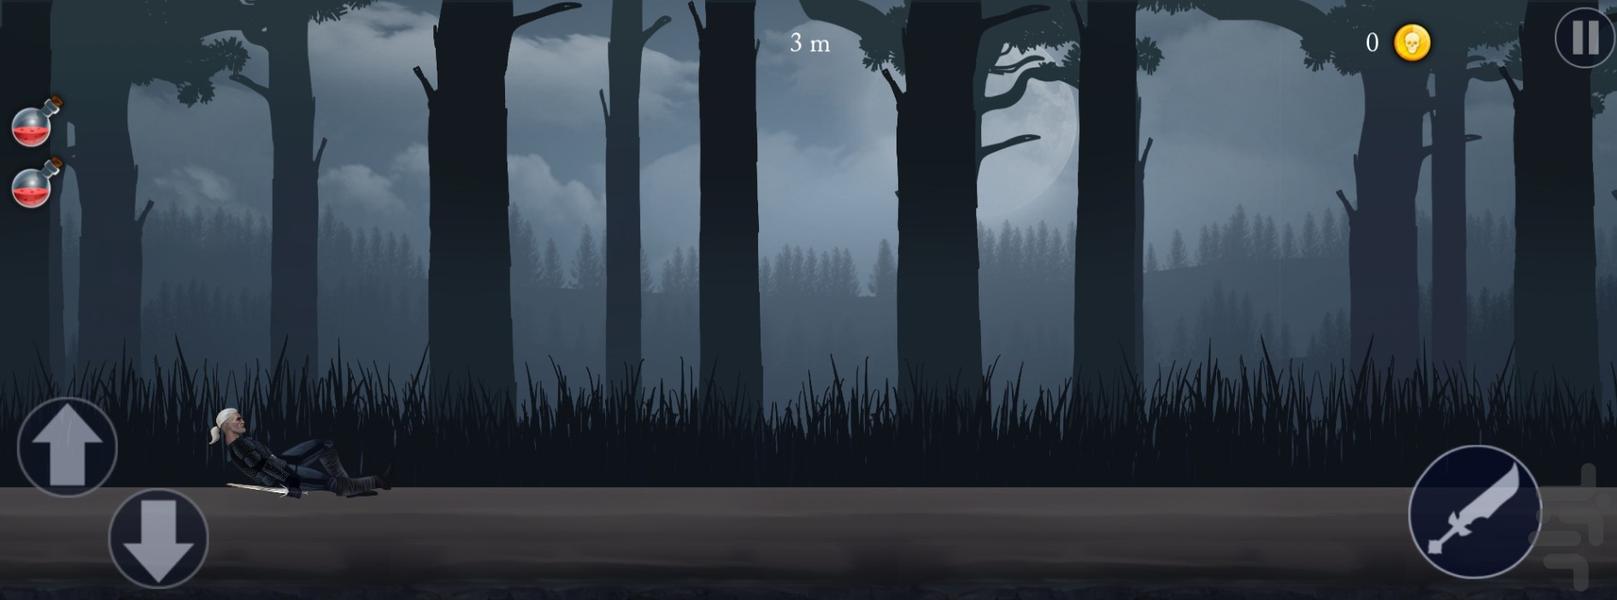 بازی شوالیه جنگجو - Gameplay image of android game